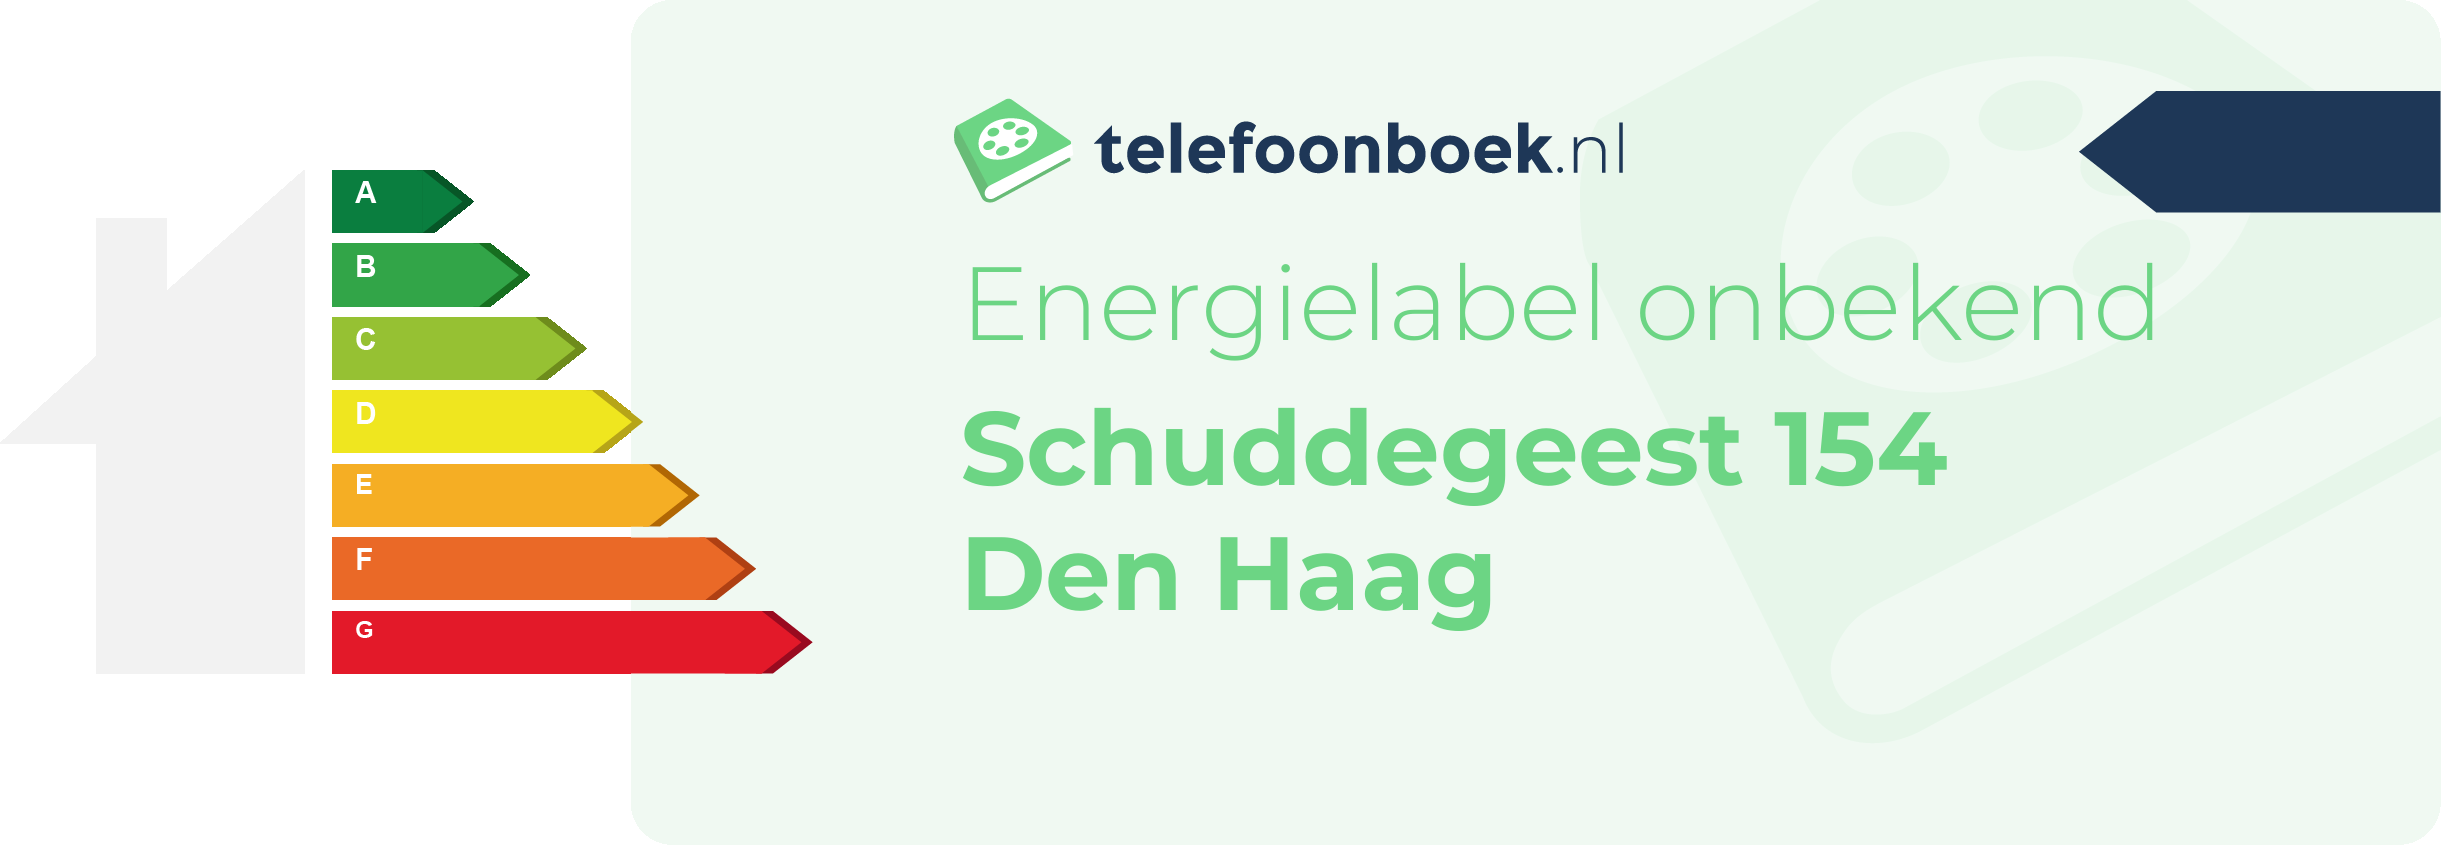 Energielabel Schuddegeest 154 Den Haag